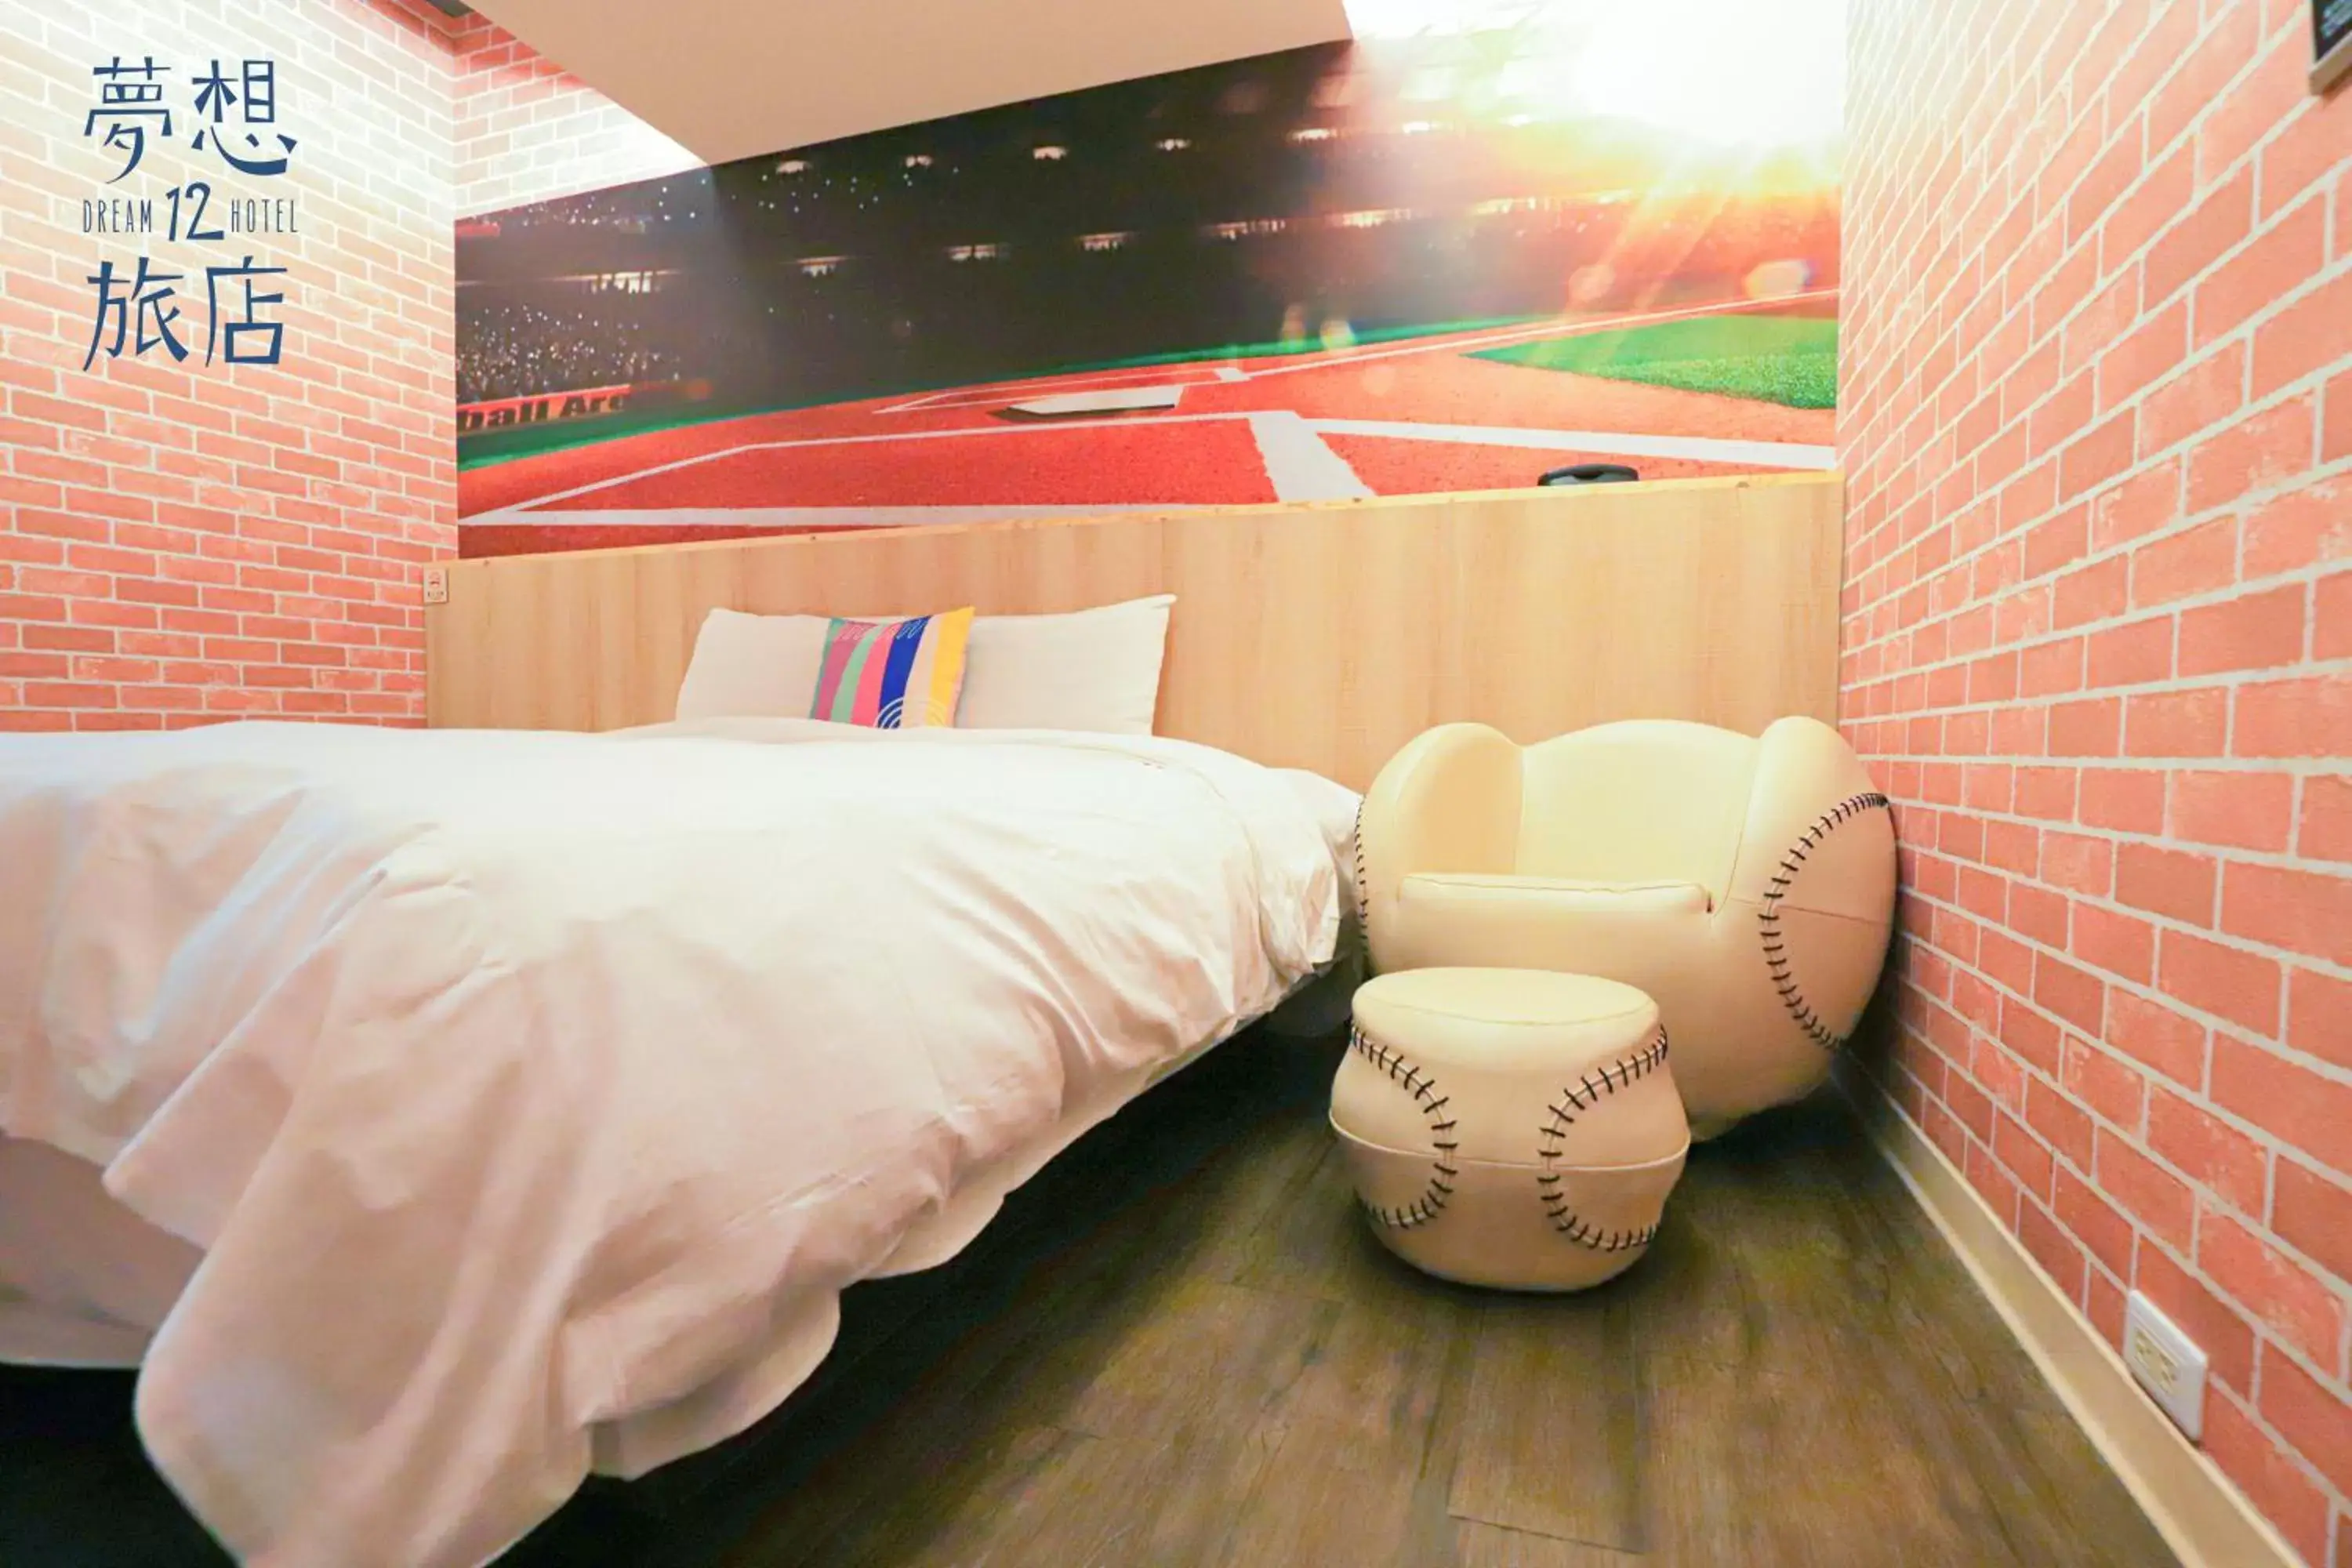 Bed in Dream 12 Hotel